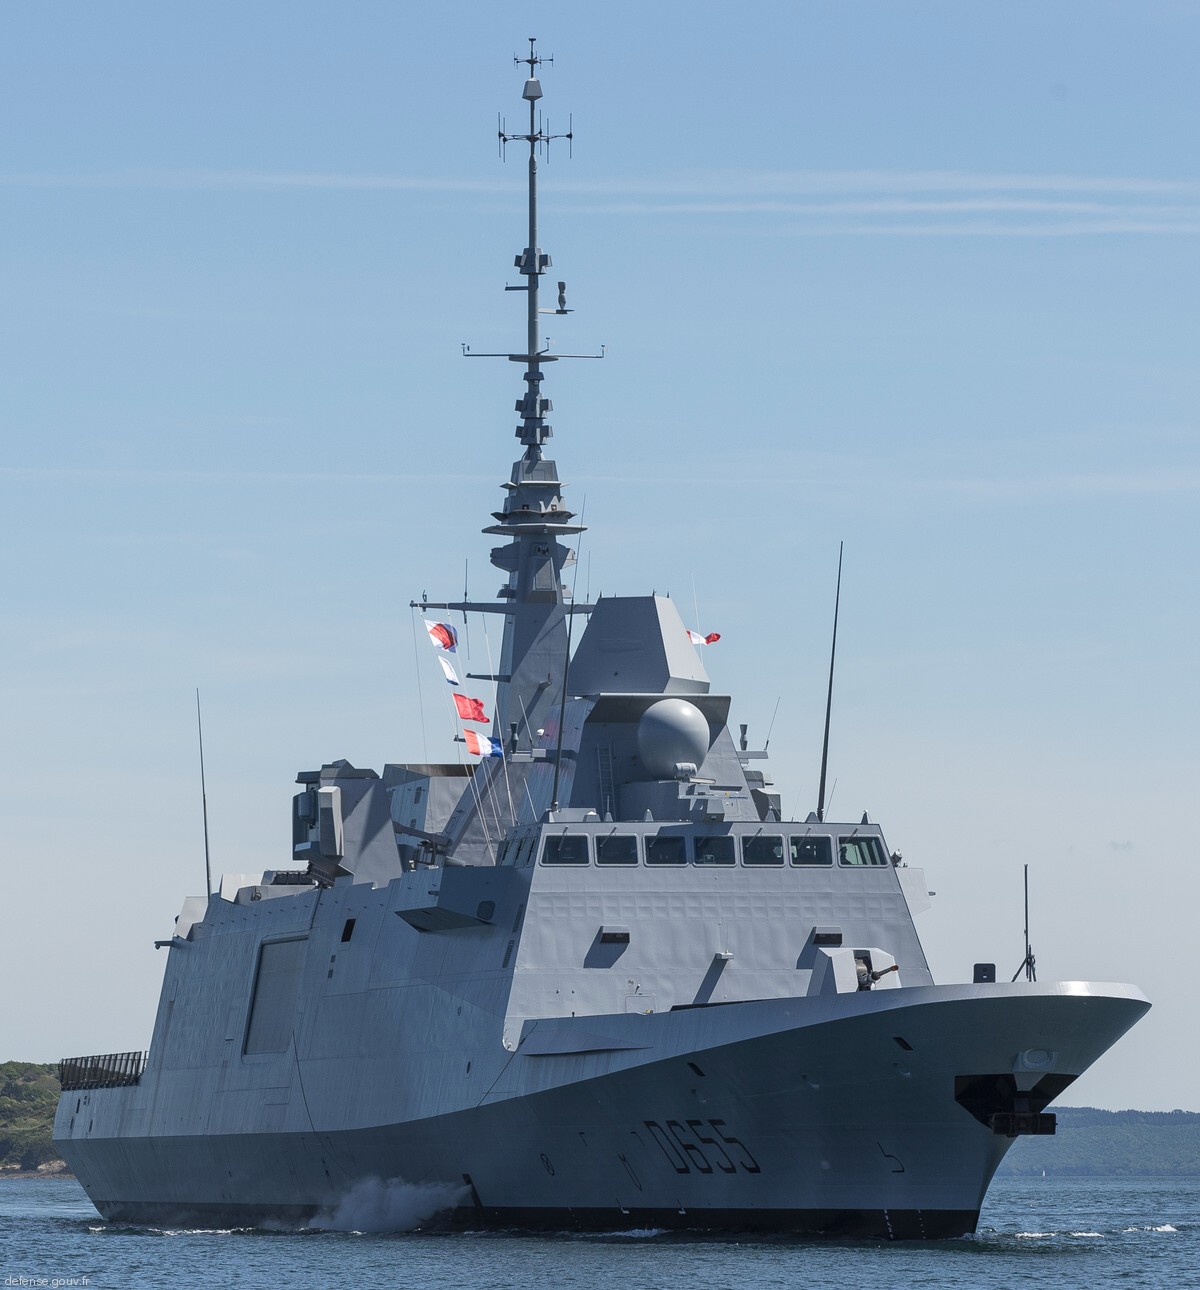 d-655 fs bretagne fremm aquitaine class frigate fregate multi purpose french navy marine nationale 02